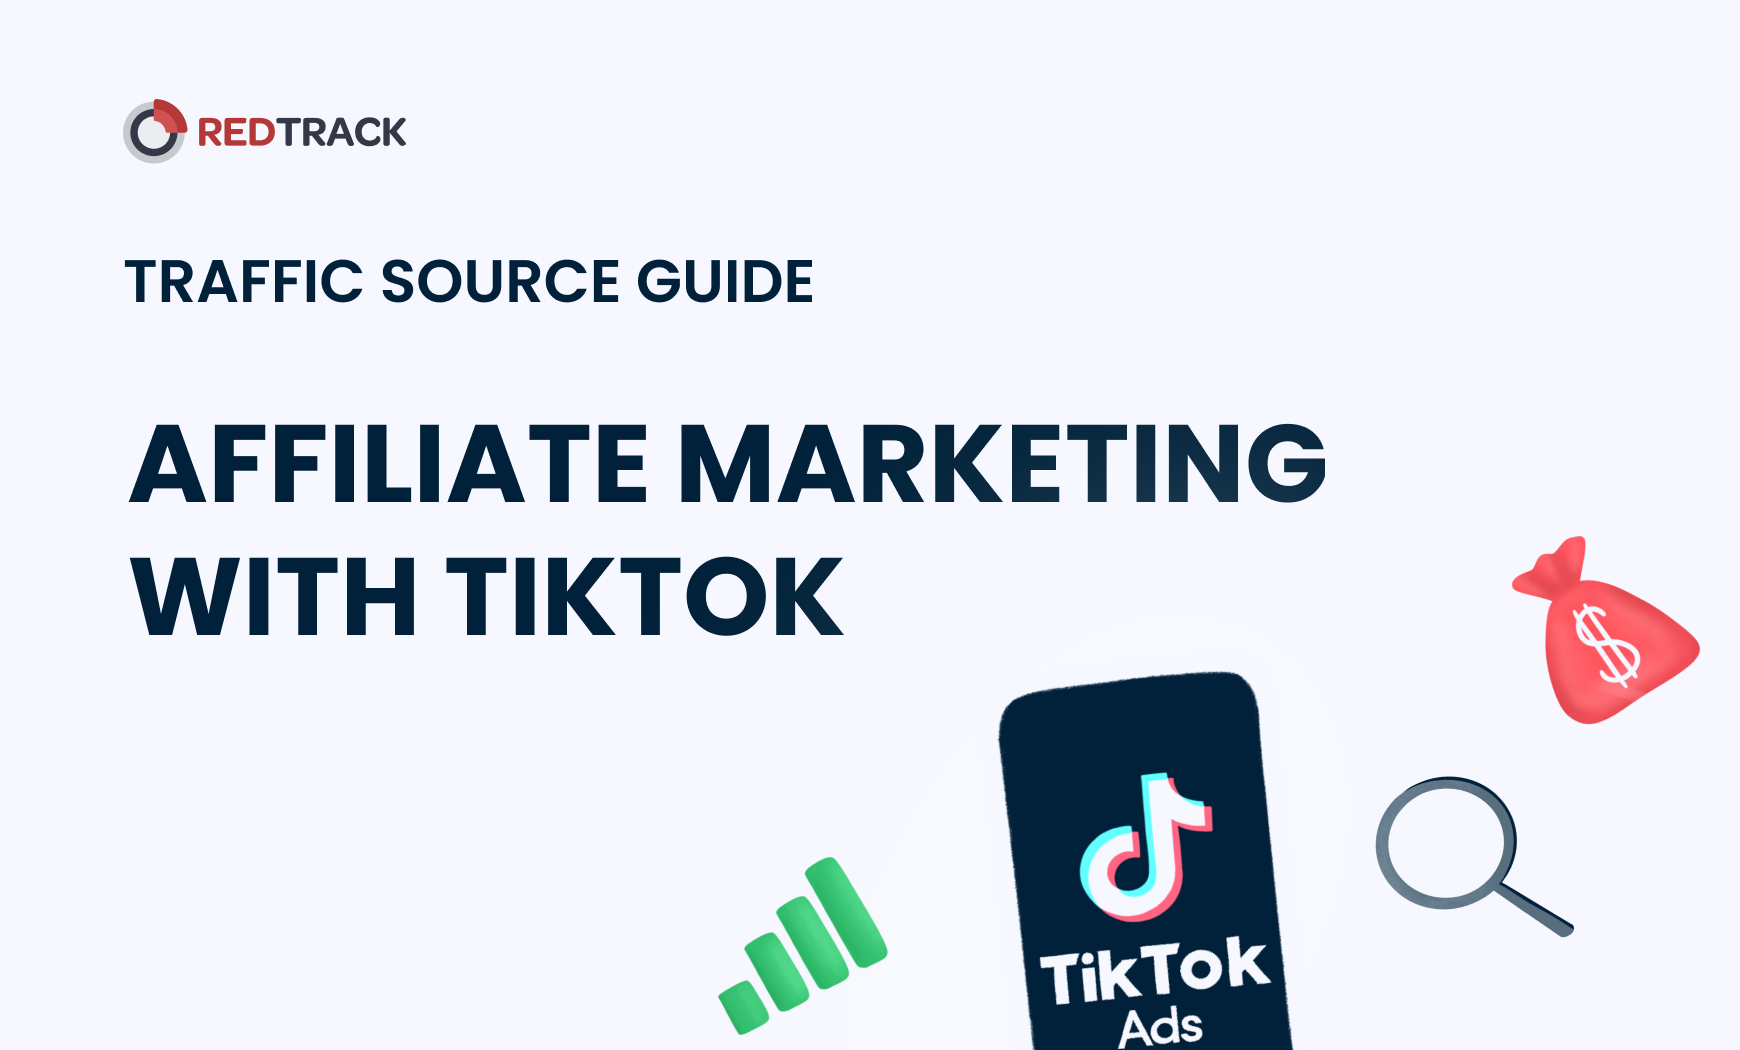 affiliate marketing with tiktok by redtrack